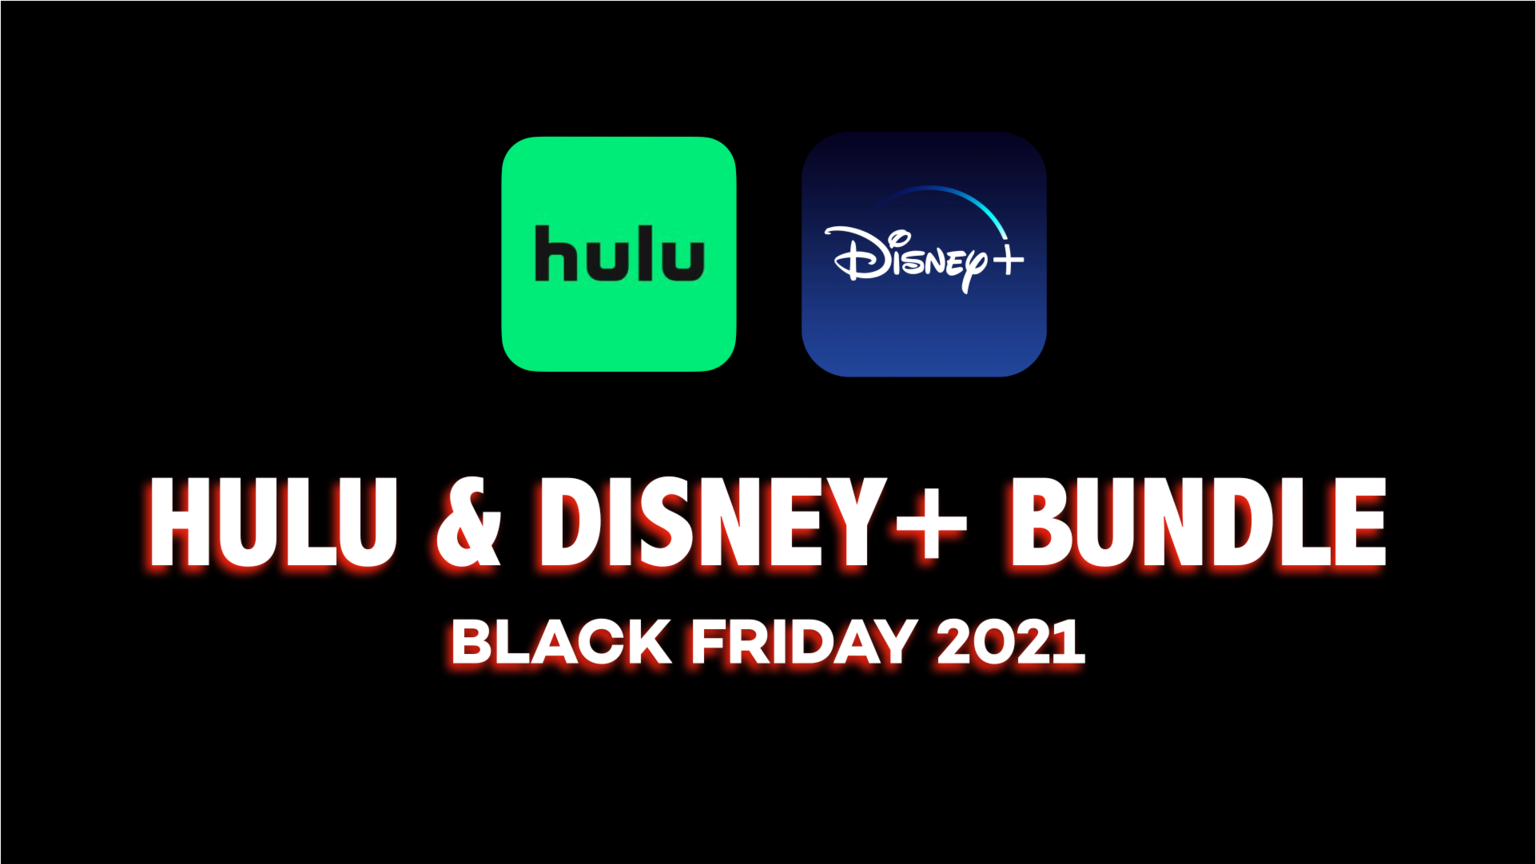 BLACK FRIDAY DEAL 2021 Get Disney Plus & Hulu Bundle For Just 7.65 a